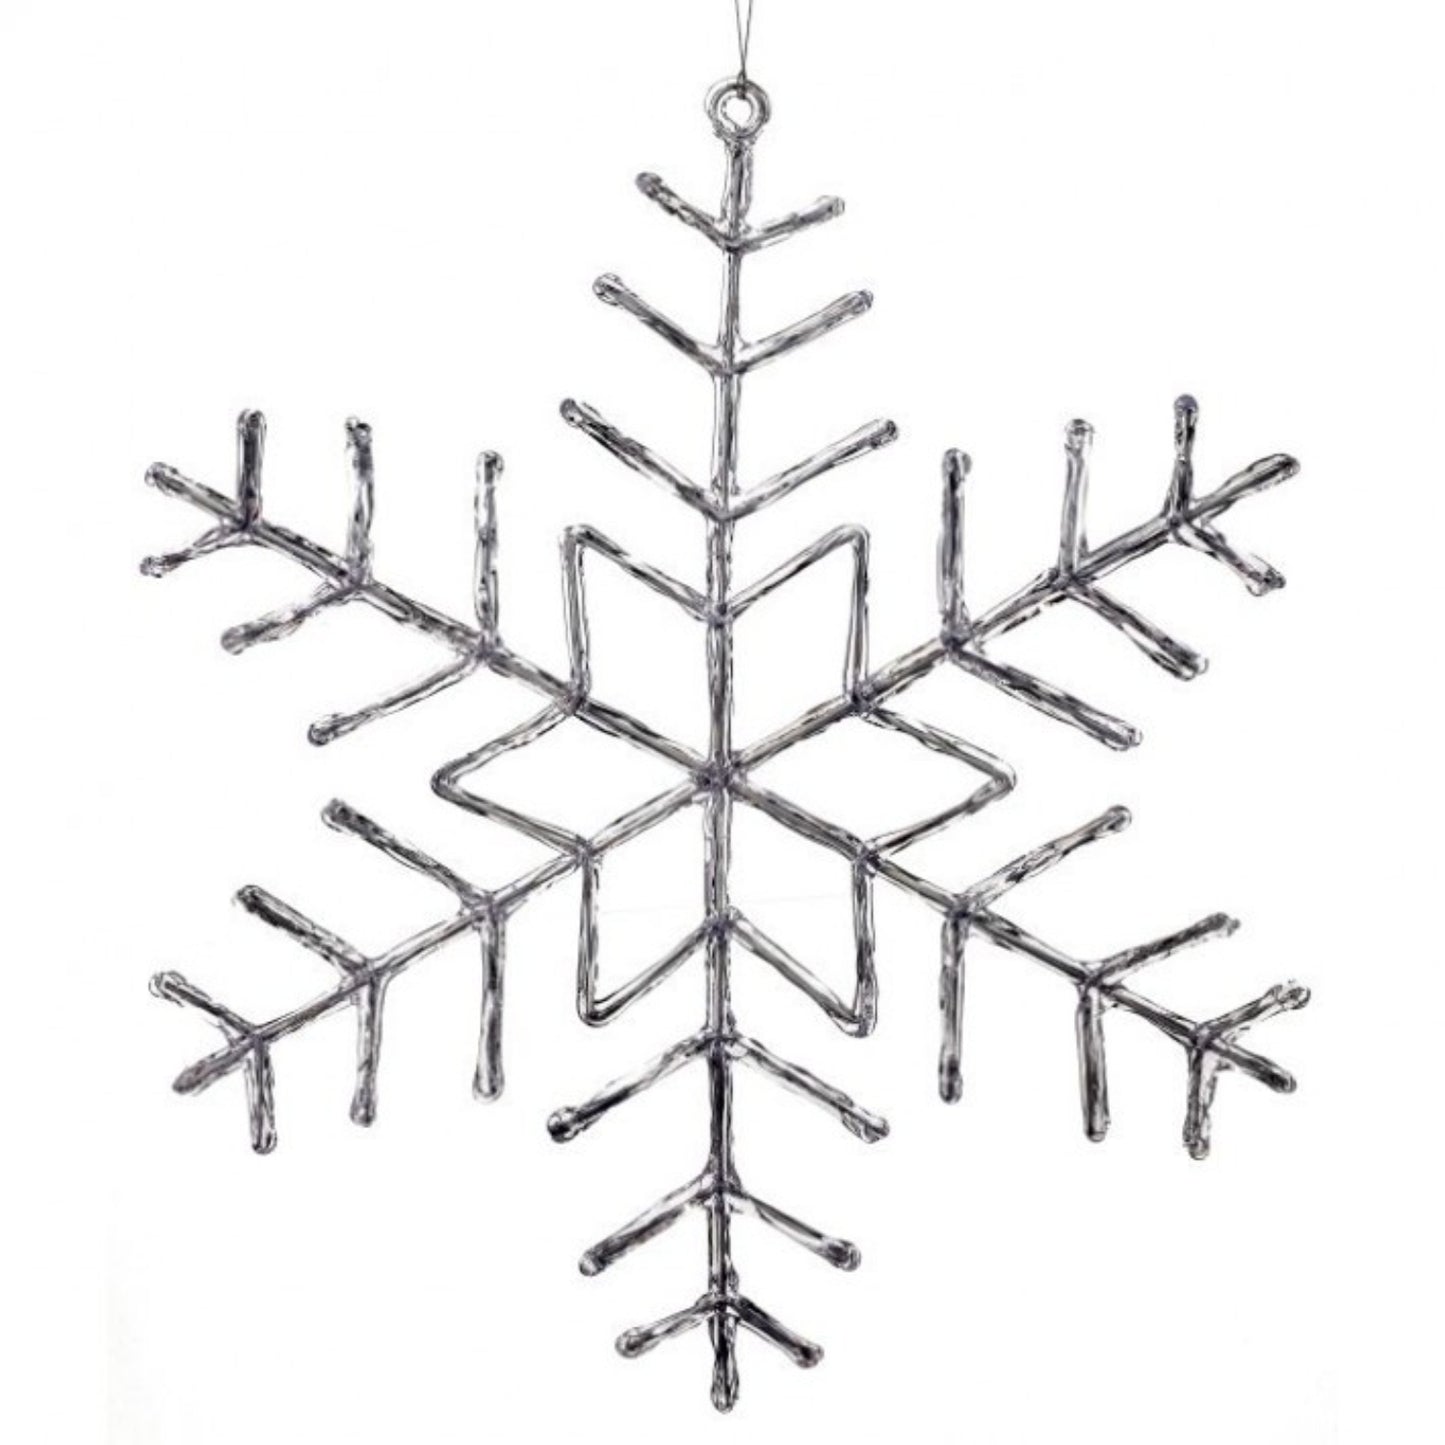 Regency International 19" Clear Snowflake Ornament